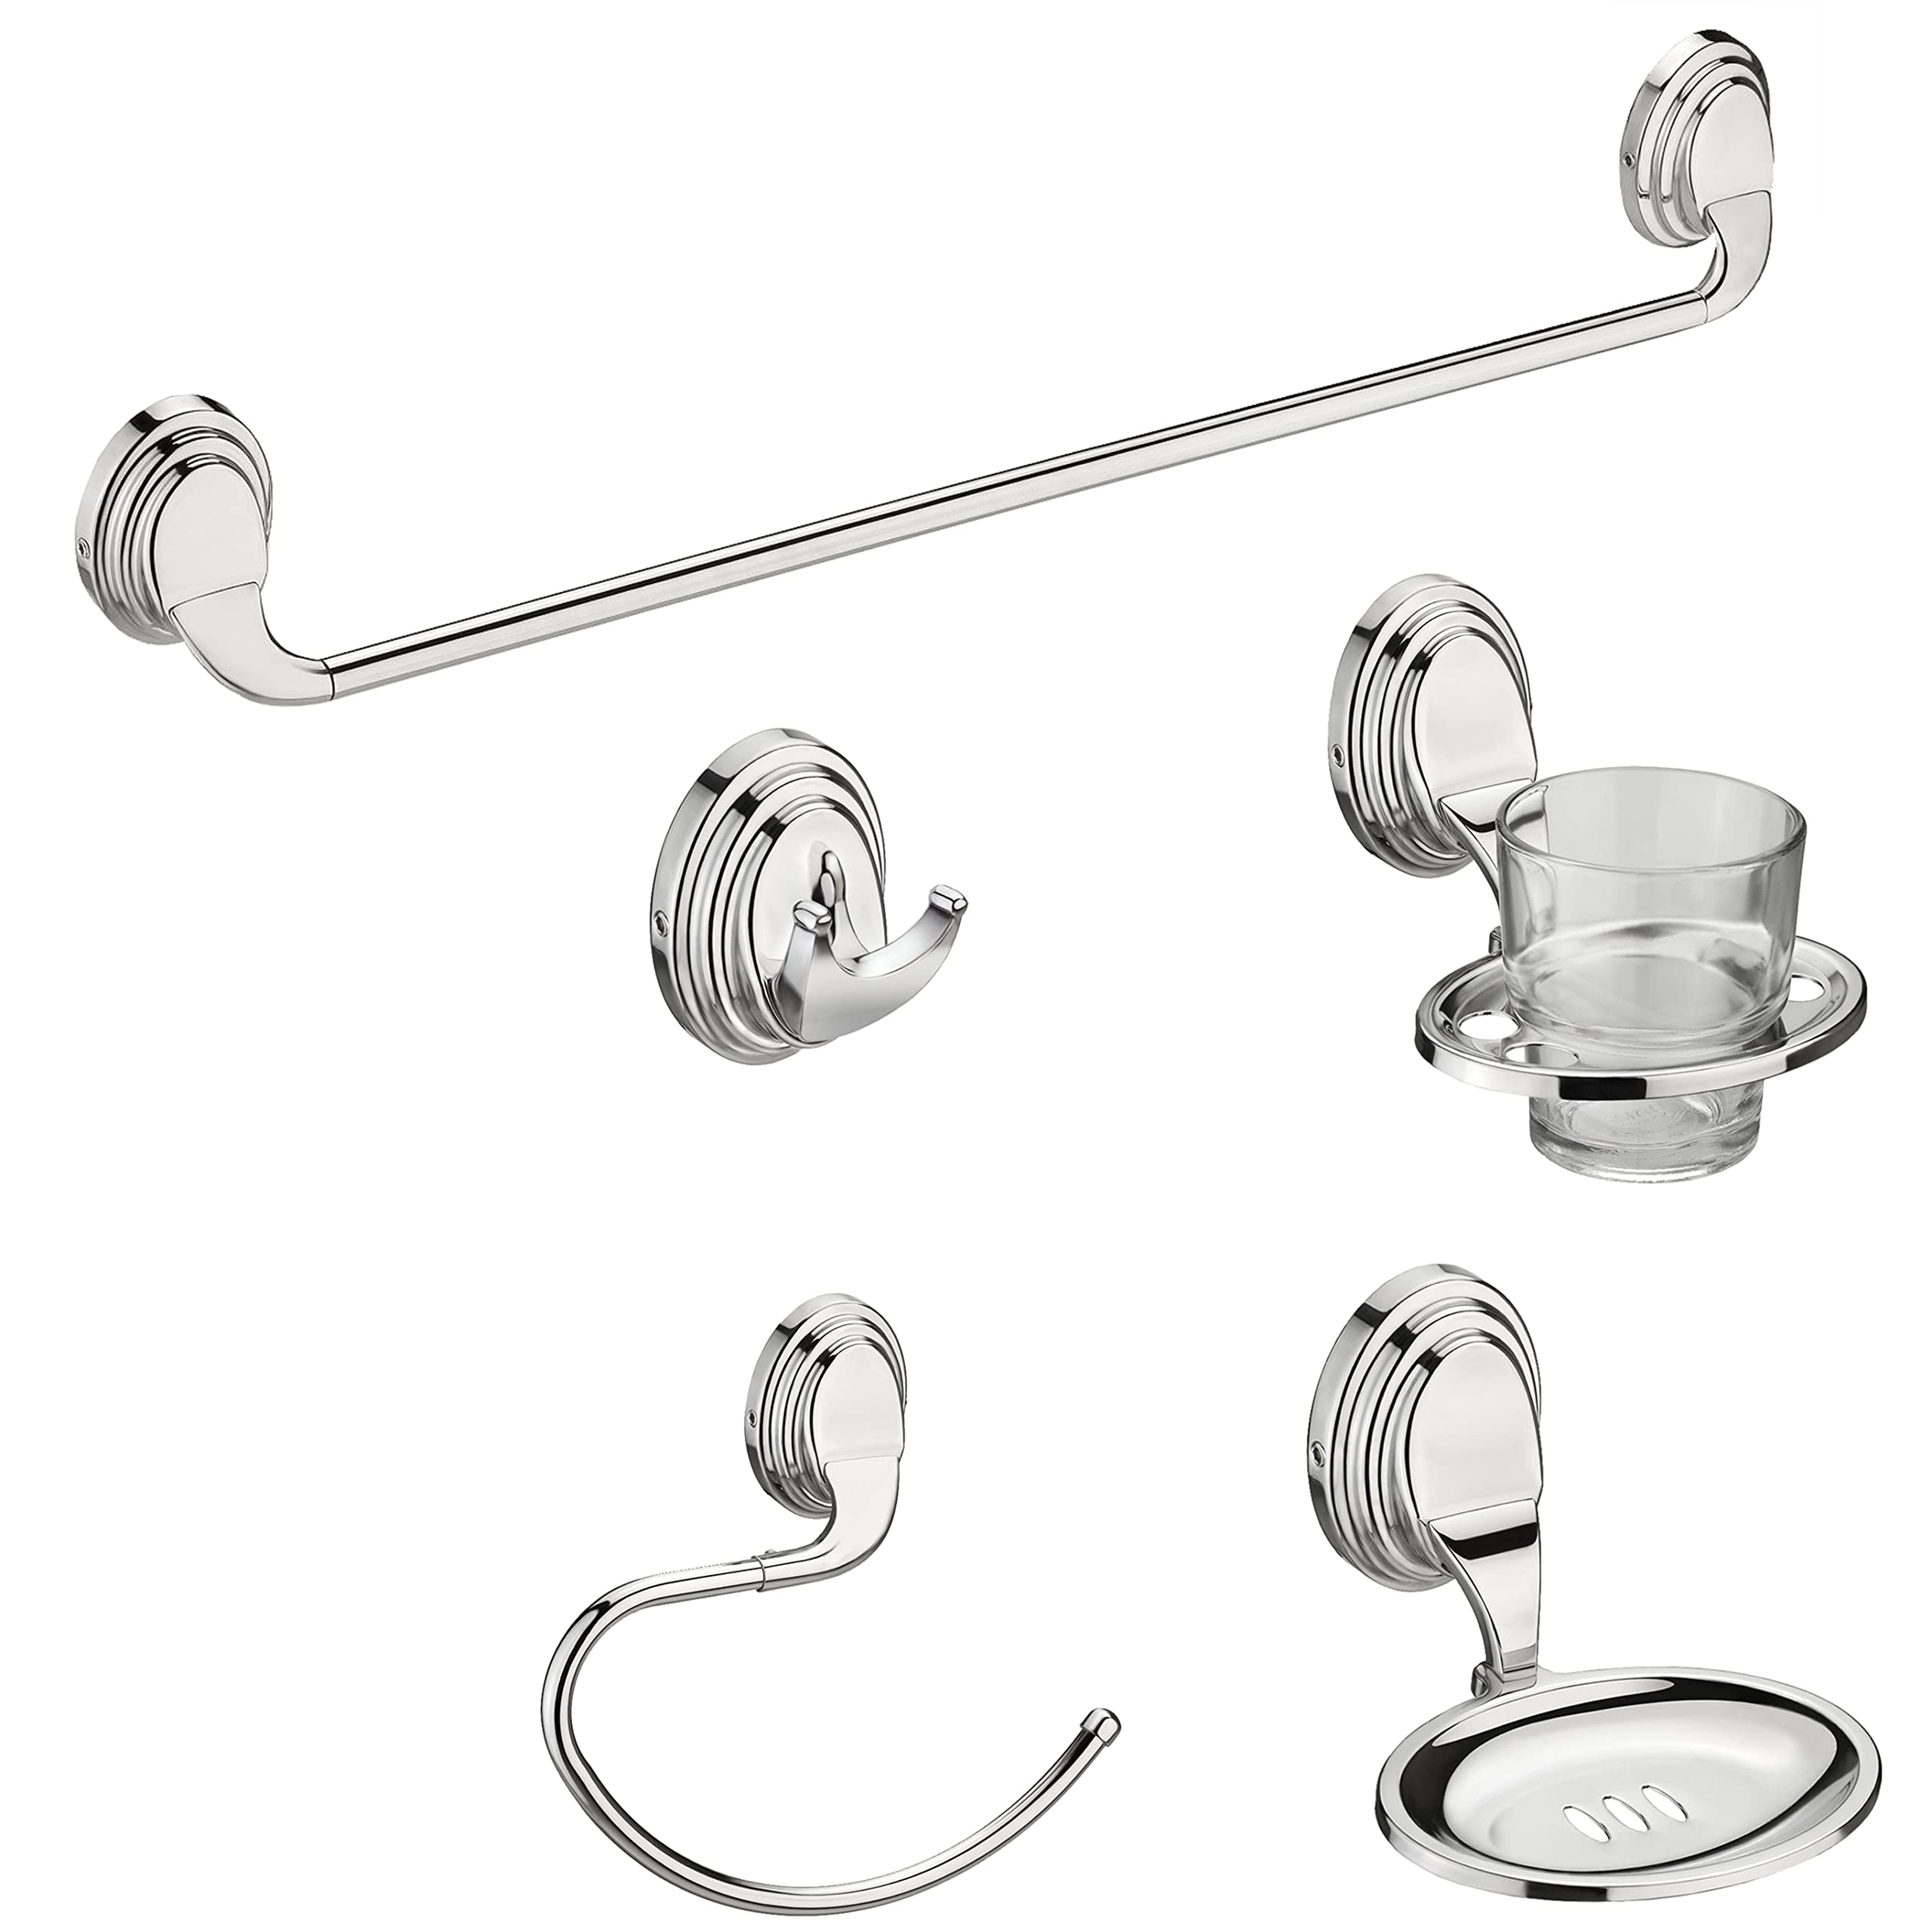 Plantex Stainless Steel 304 Grade Bathroom Accessories Set/Bathroom Hanger for Towel/Towel Bar/Napkin Ring/Tumbler Holder/Soap Dish/Robe Hook (Cubic - Pack of 5)